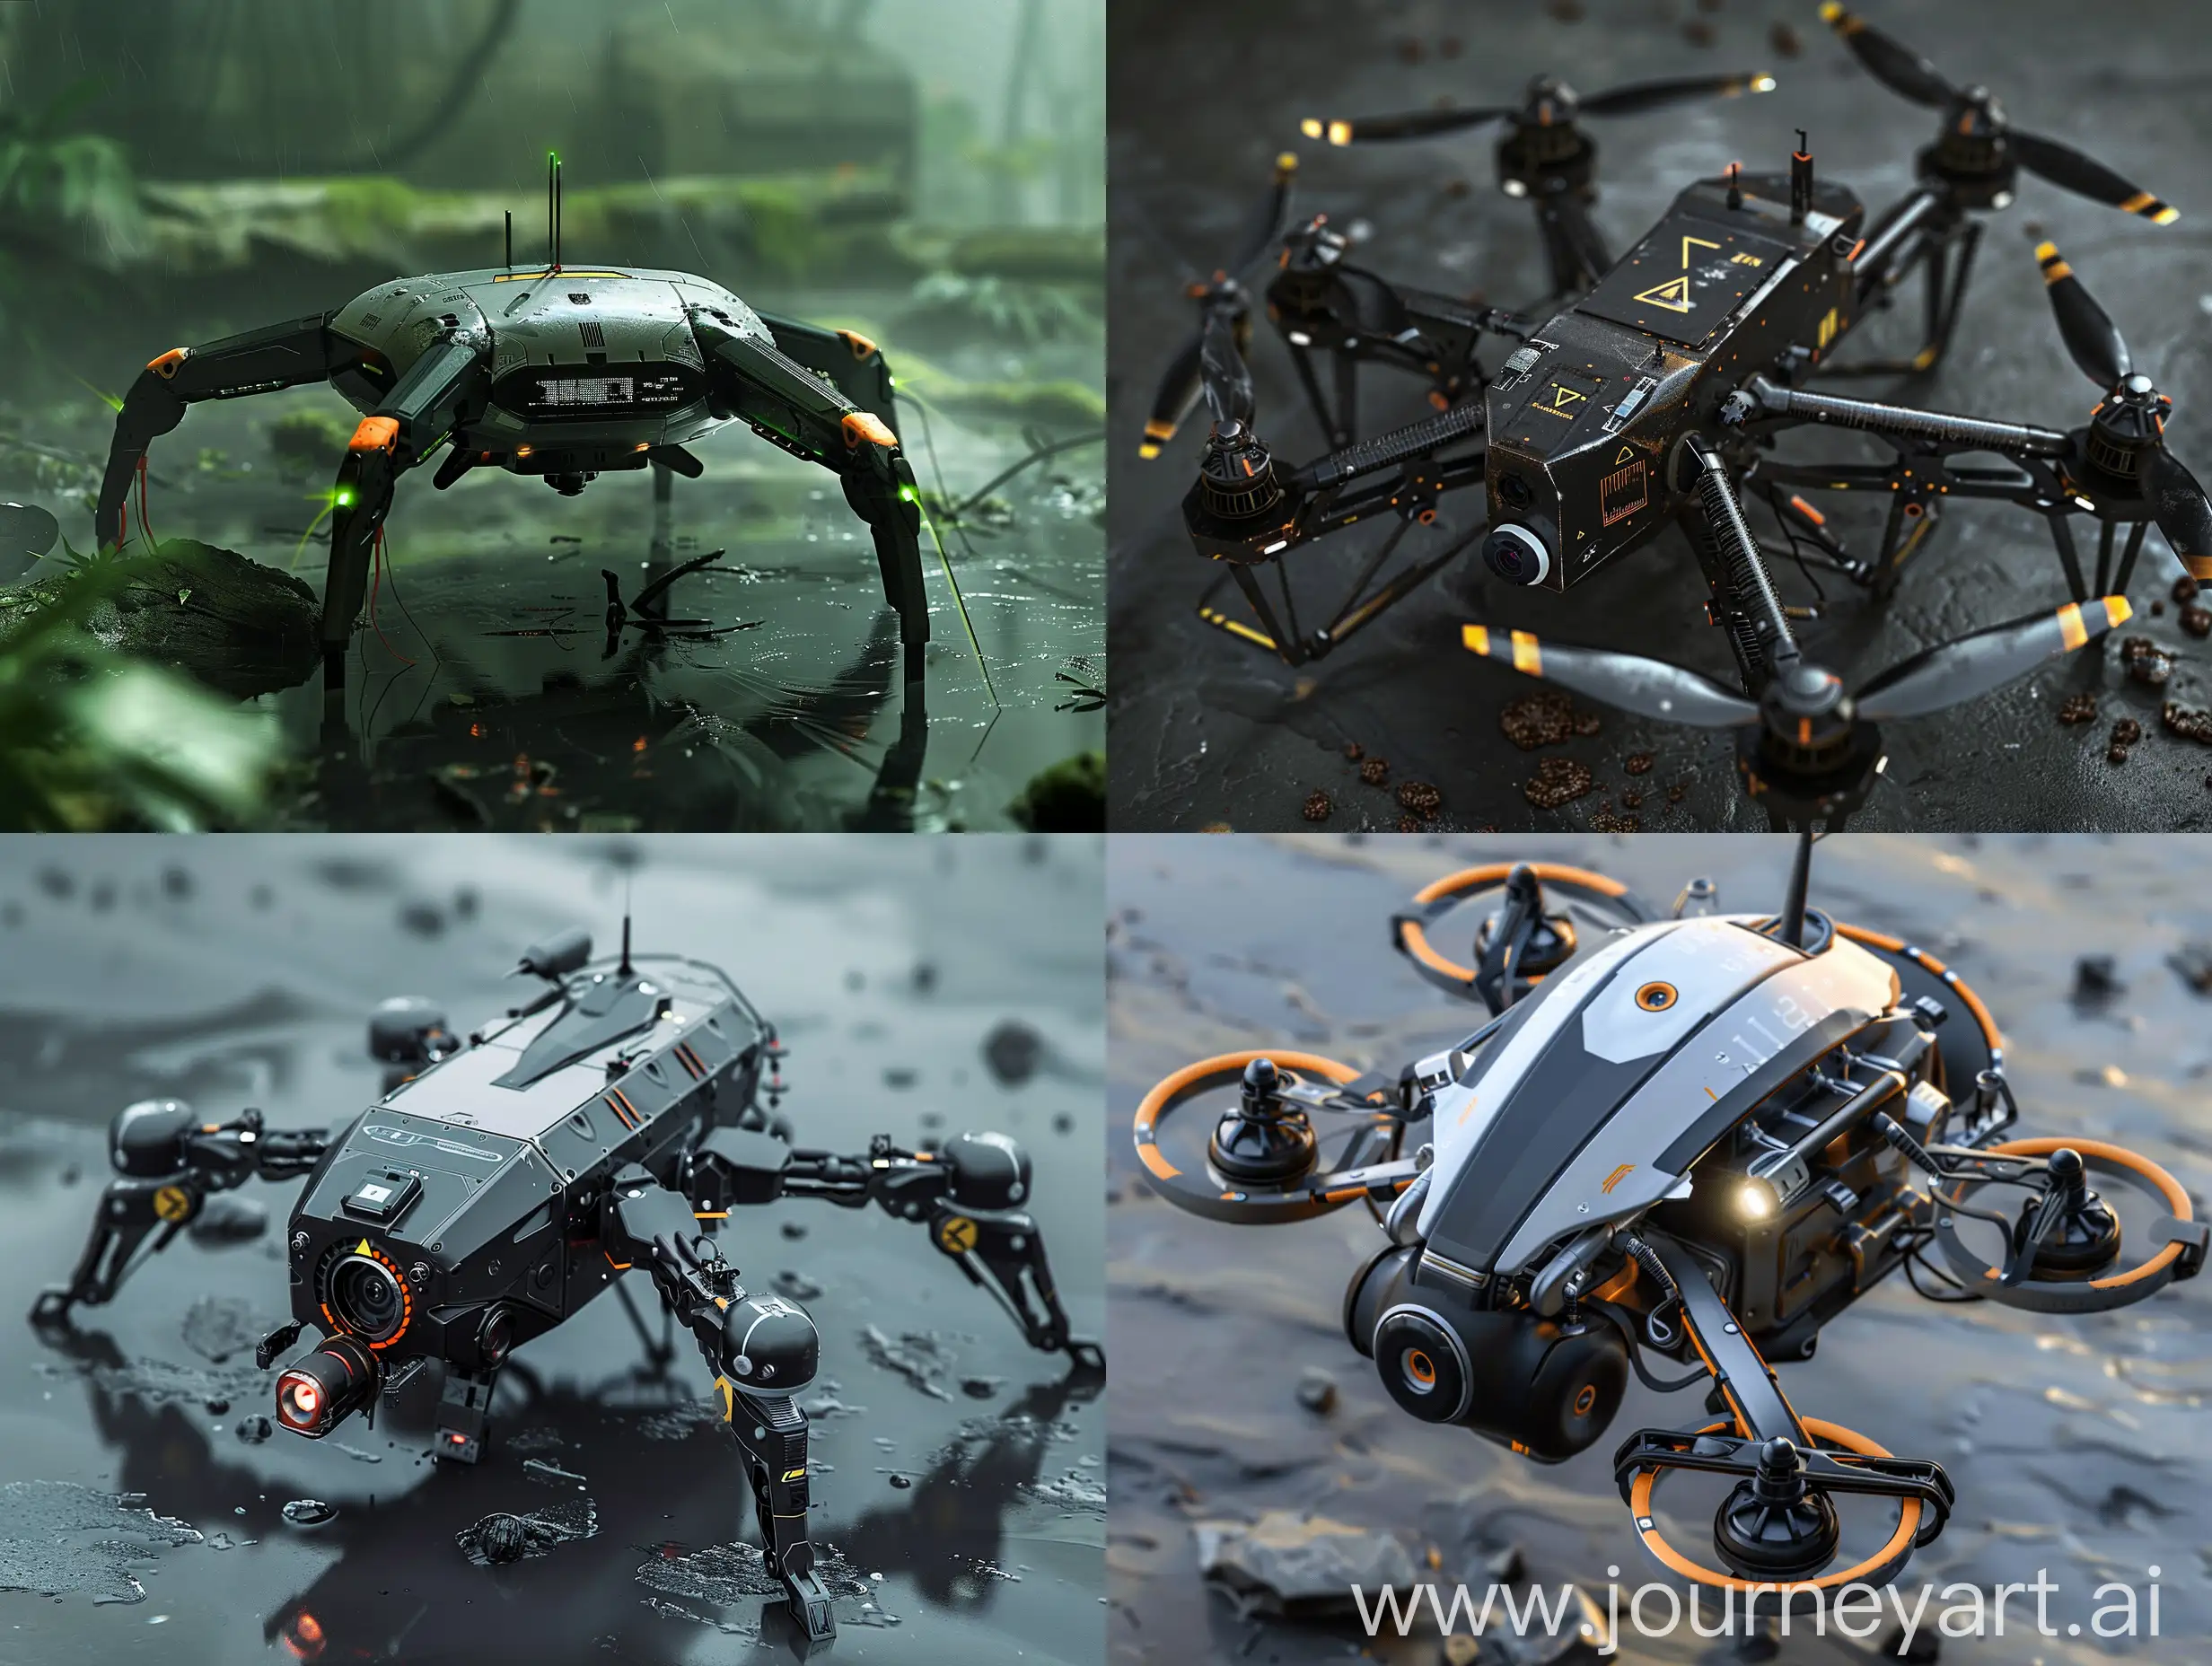 Advanced-HazardousArea-Exploration-Drone-with-Cyberpunk-Aesthetic